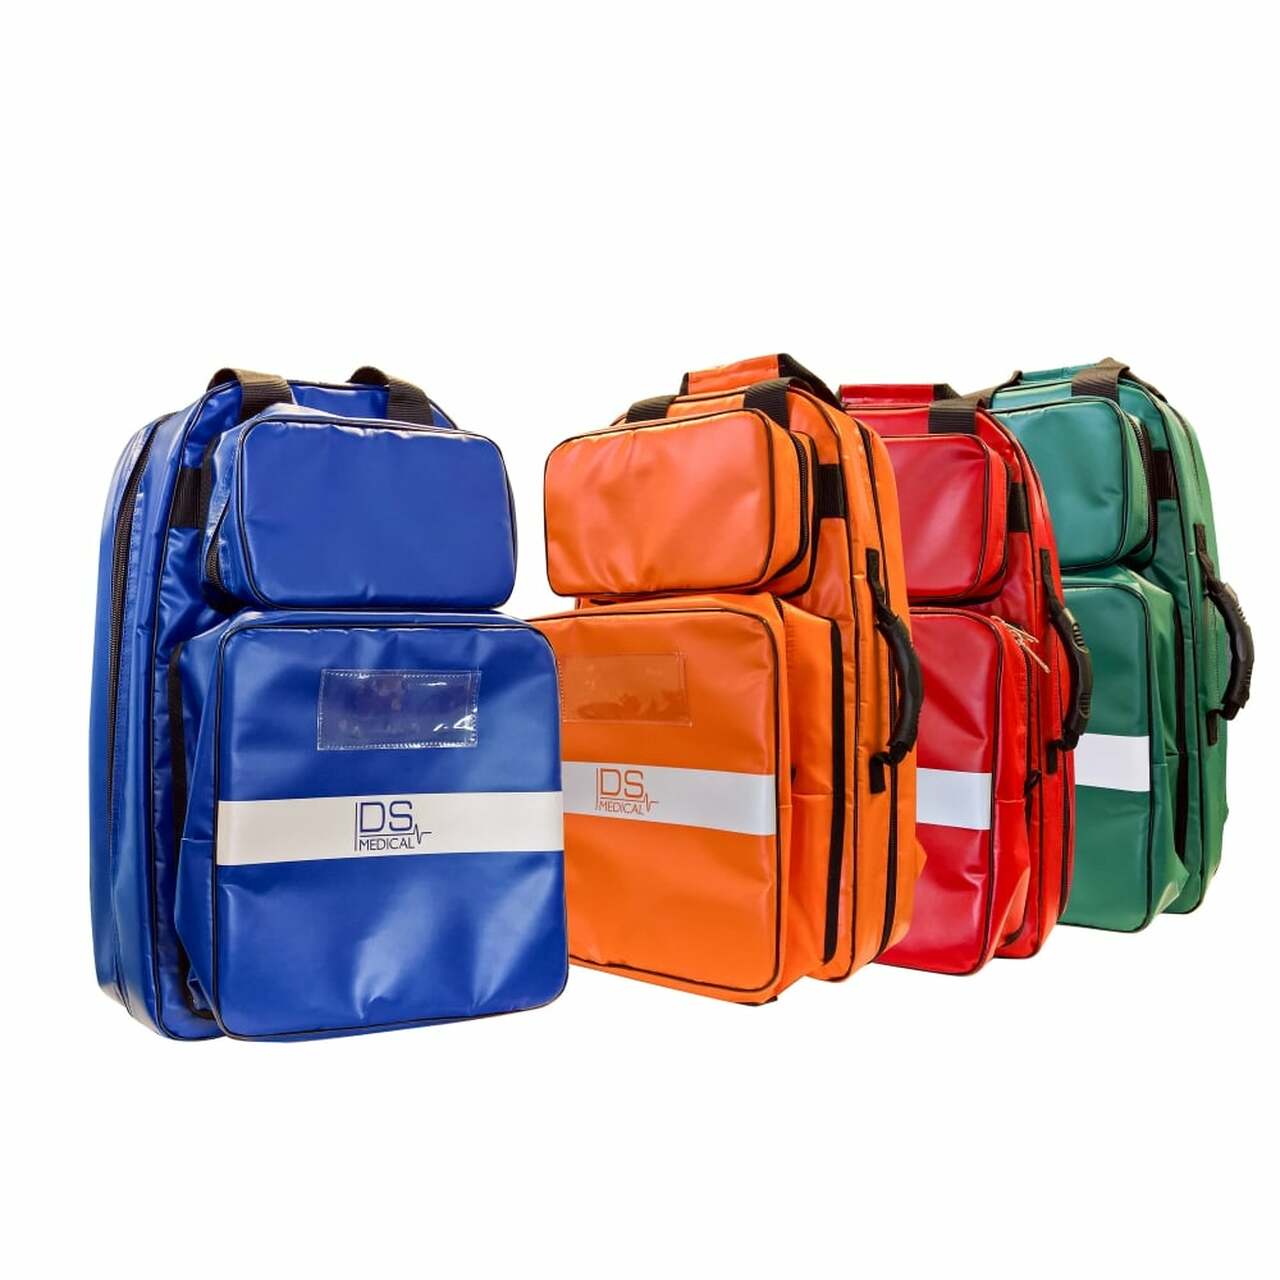 DS Medical Emergency Response Bag Mark II